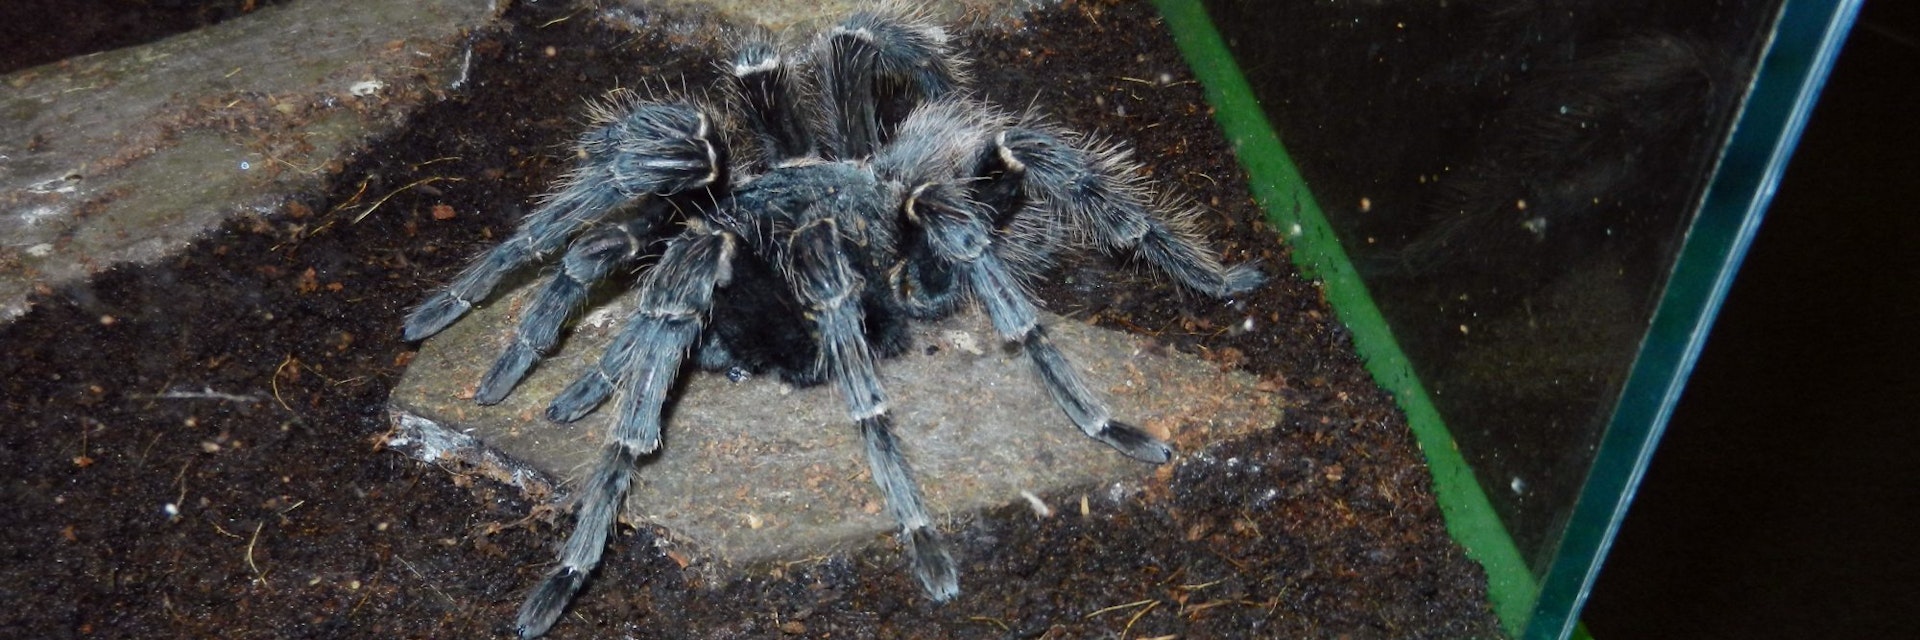 VICTORIA, BC/CANADA - APRIL 27 2015:Tarantula spider in the bugs zoo in Victoria BC, Canada on April 27 2015; Shutterstock ID 1427078042; your: Bridget Brown; gl: 65050; netsuite: Online Editorial; full: POI Image Update

Victoria Bug Zoo
